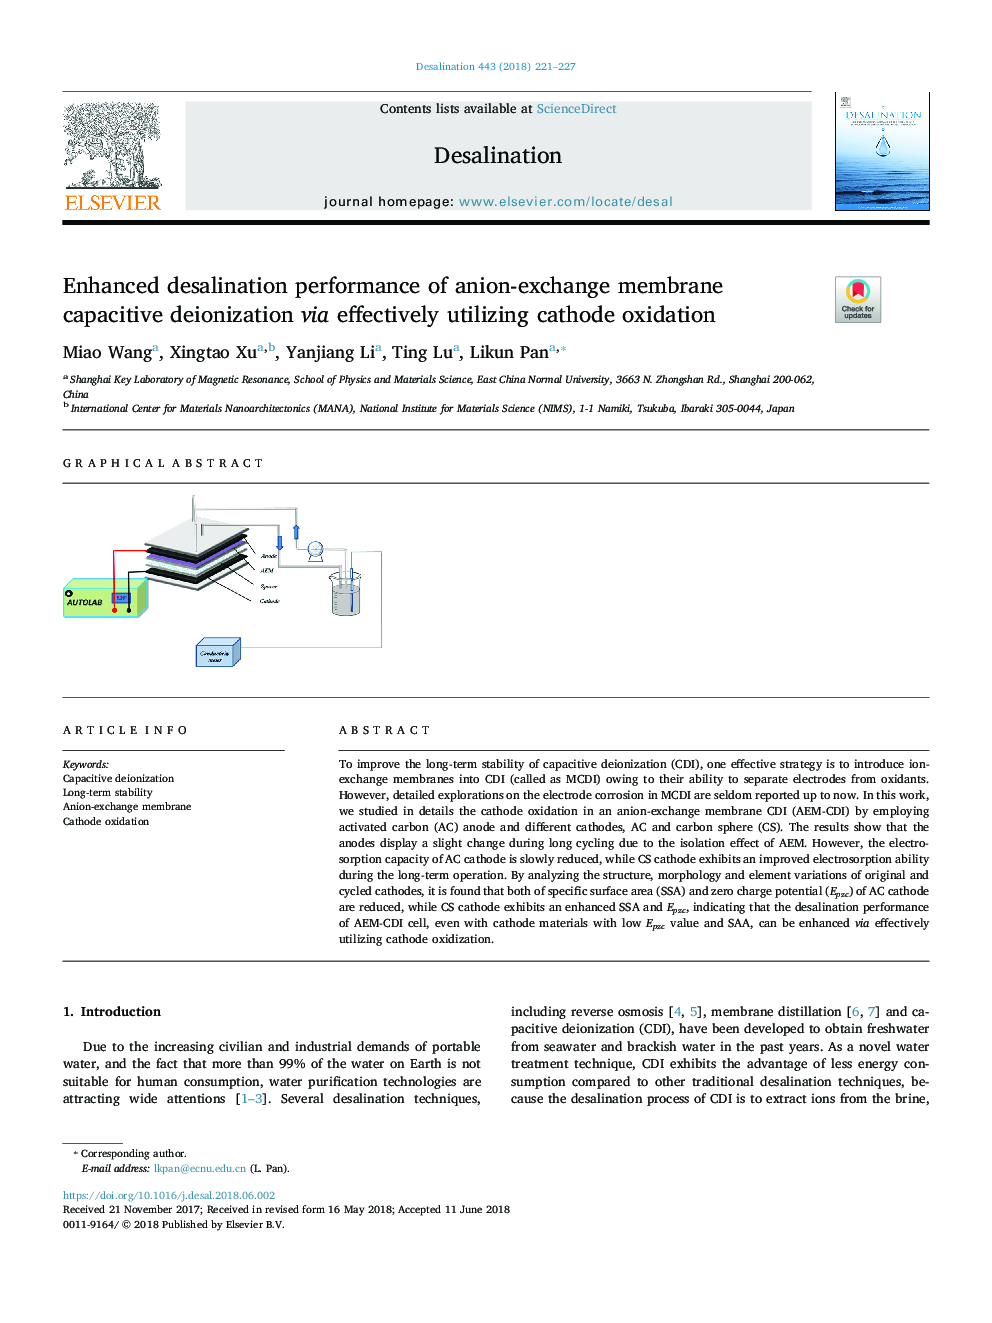 Enhanced desalination performance of anion-exchange membrane capacitive deionization via effectively utilizing cathode oxidation